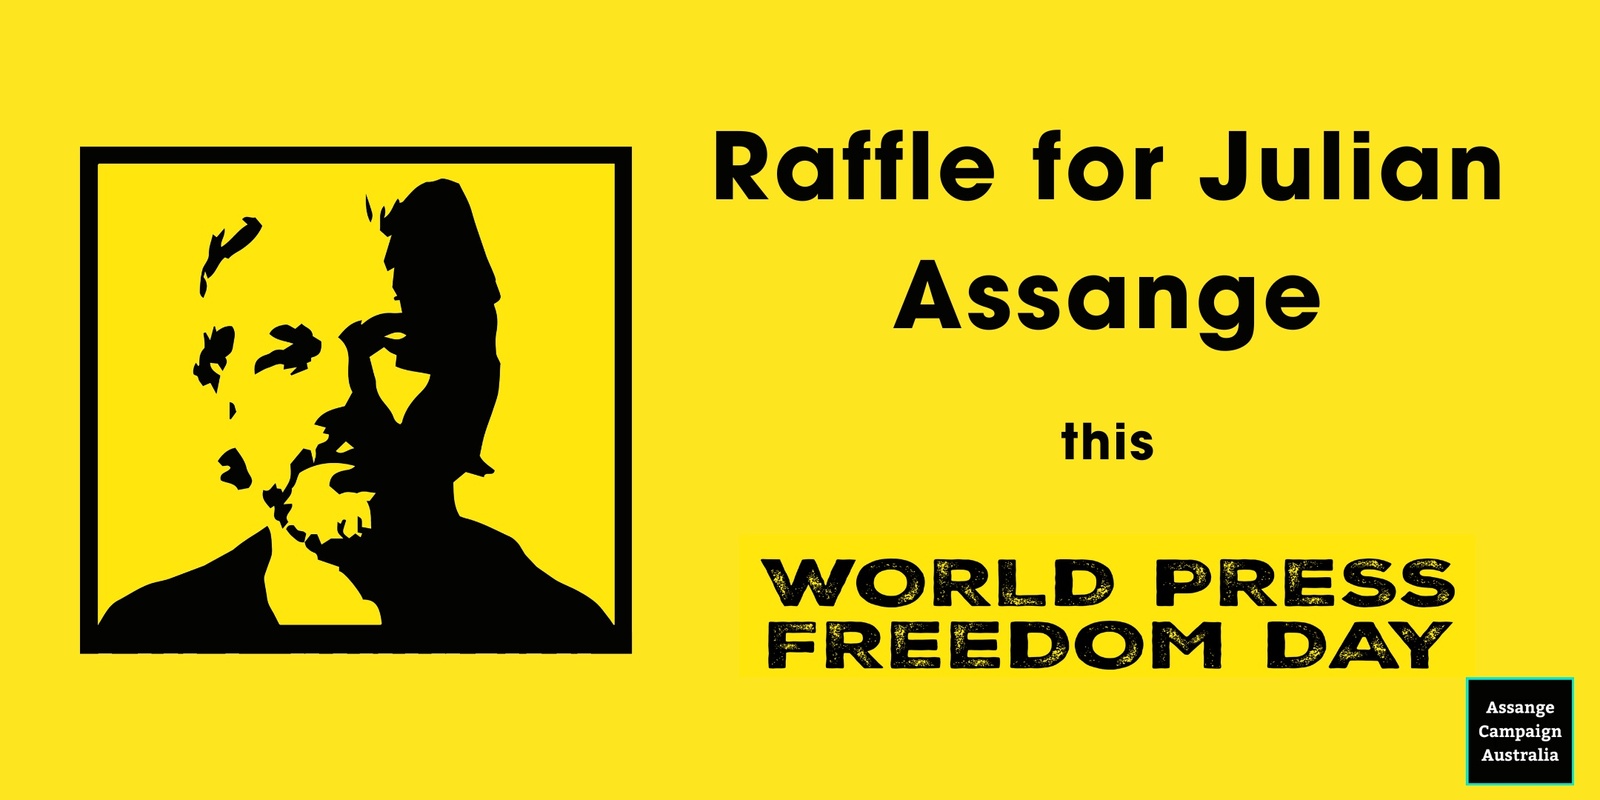 Banner image for Raffle for Julian Assange on World Press Freedom Day